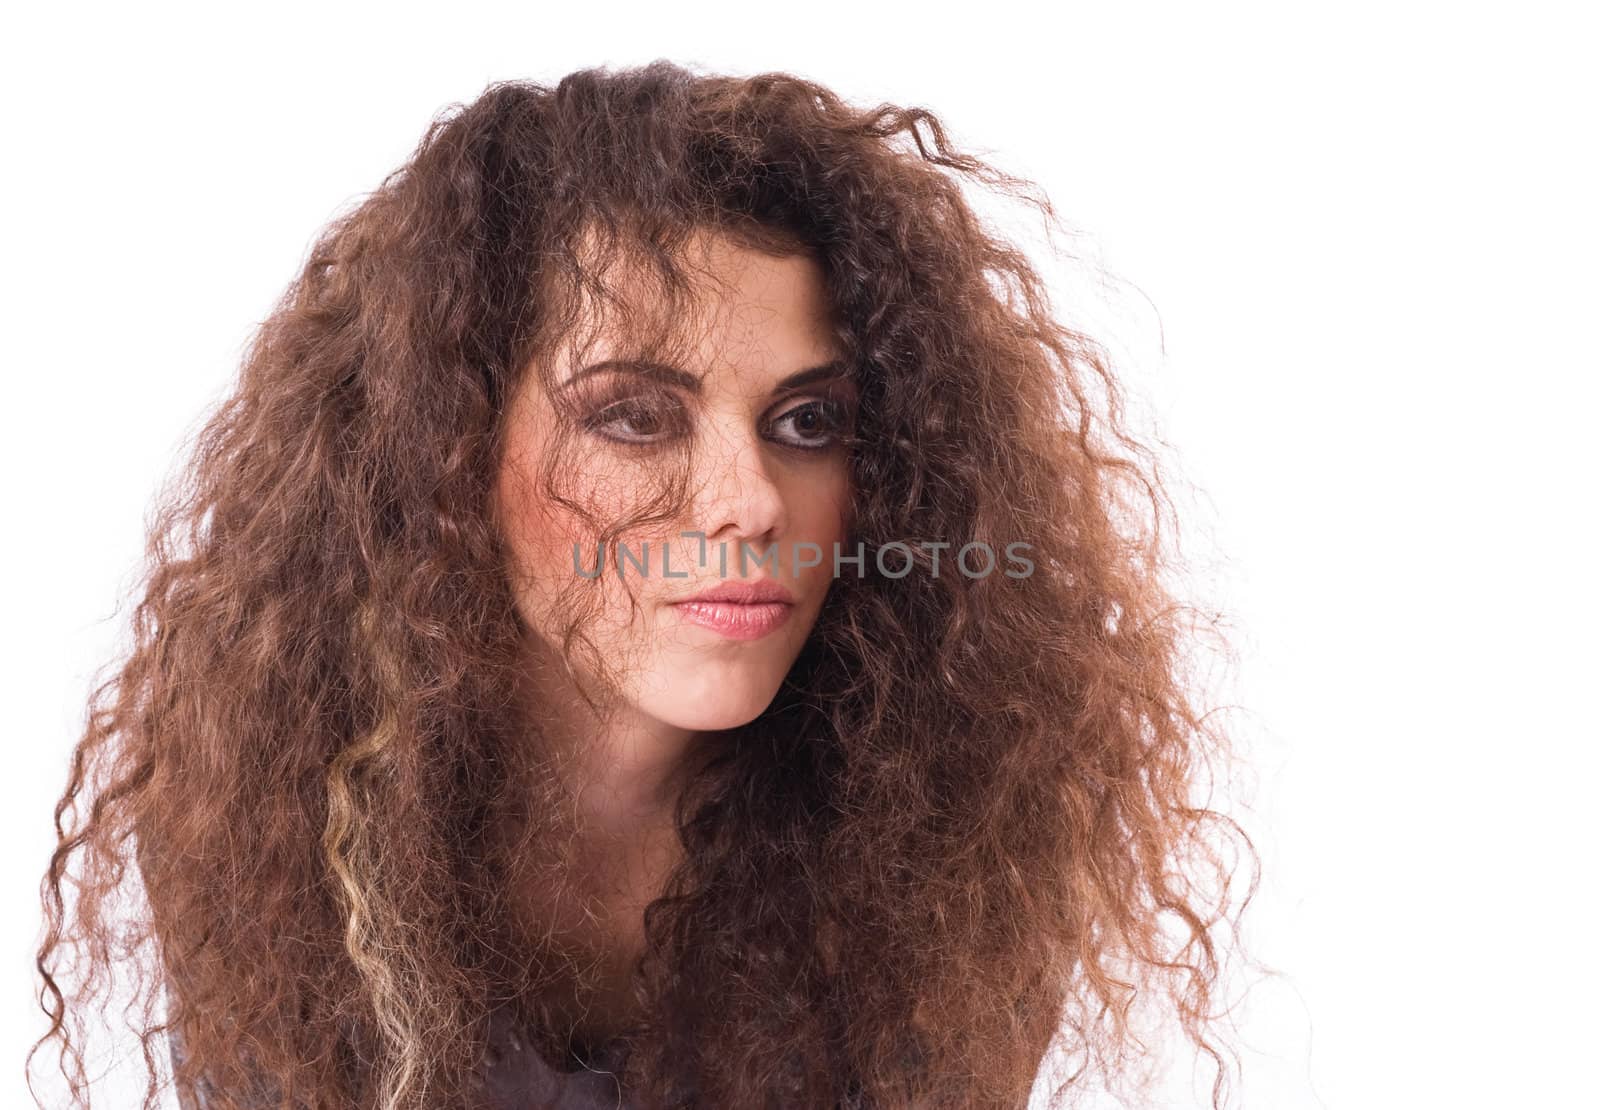 Desponded curly-headed girl by rozhenyuk